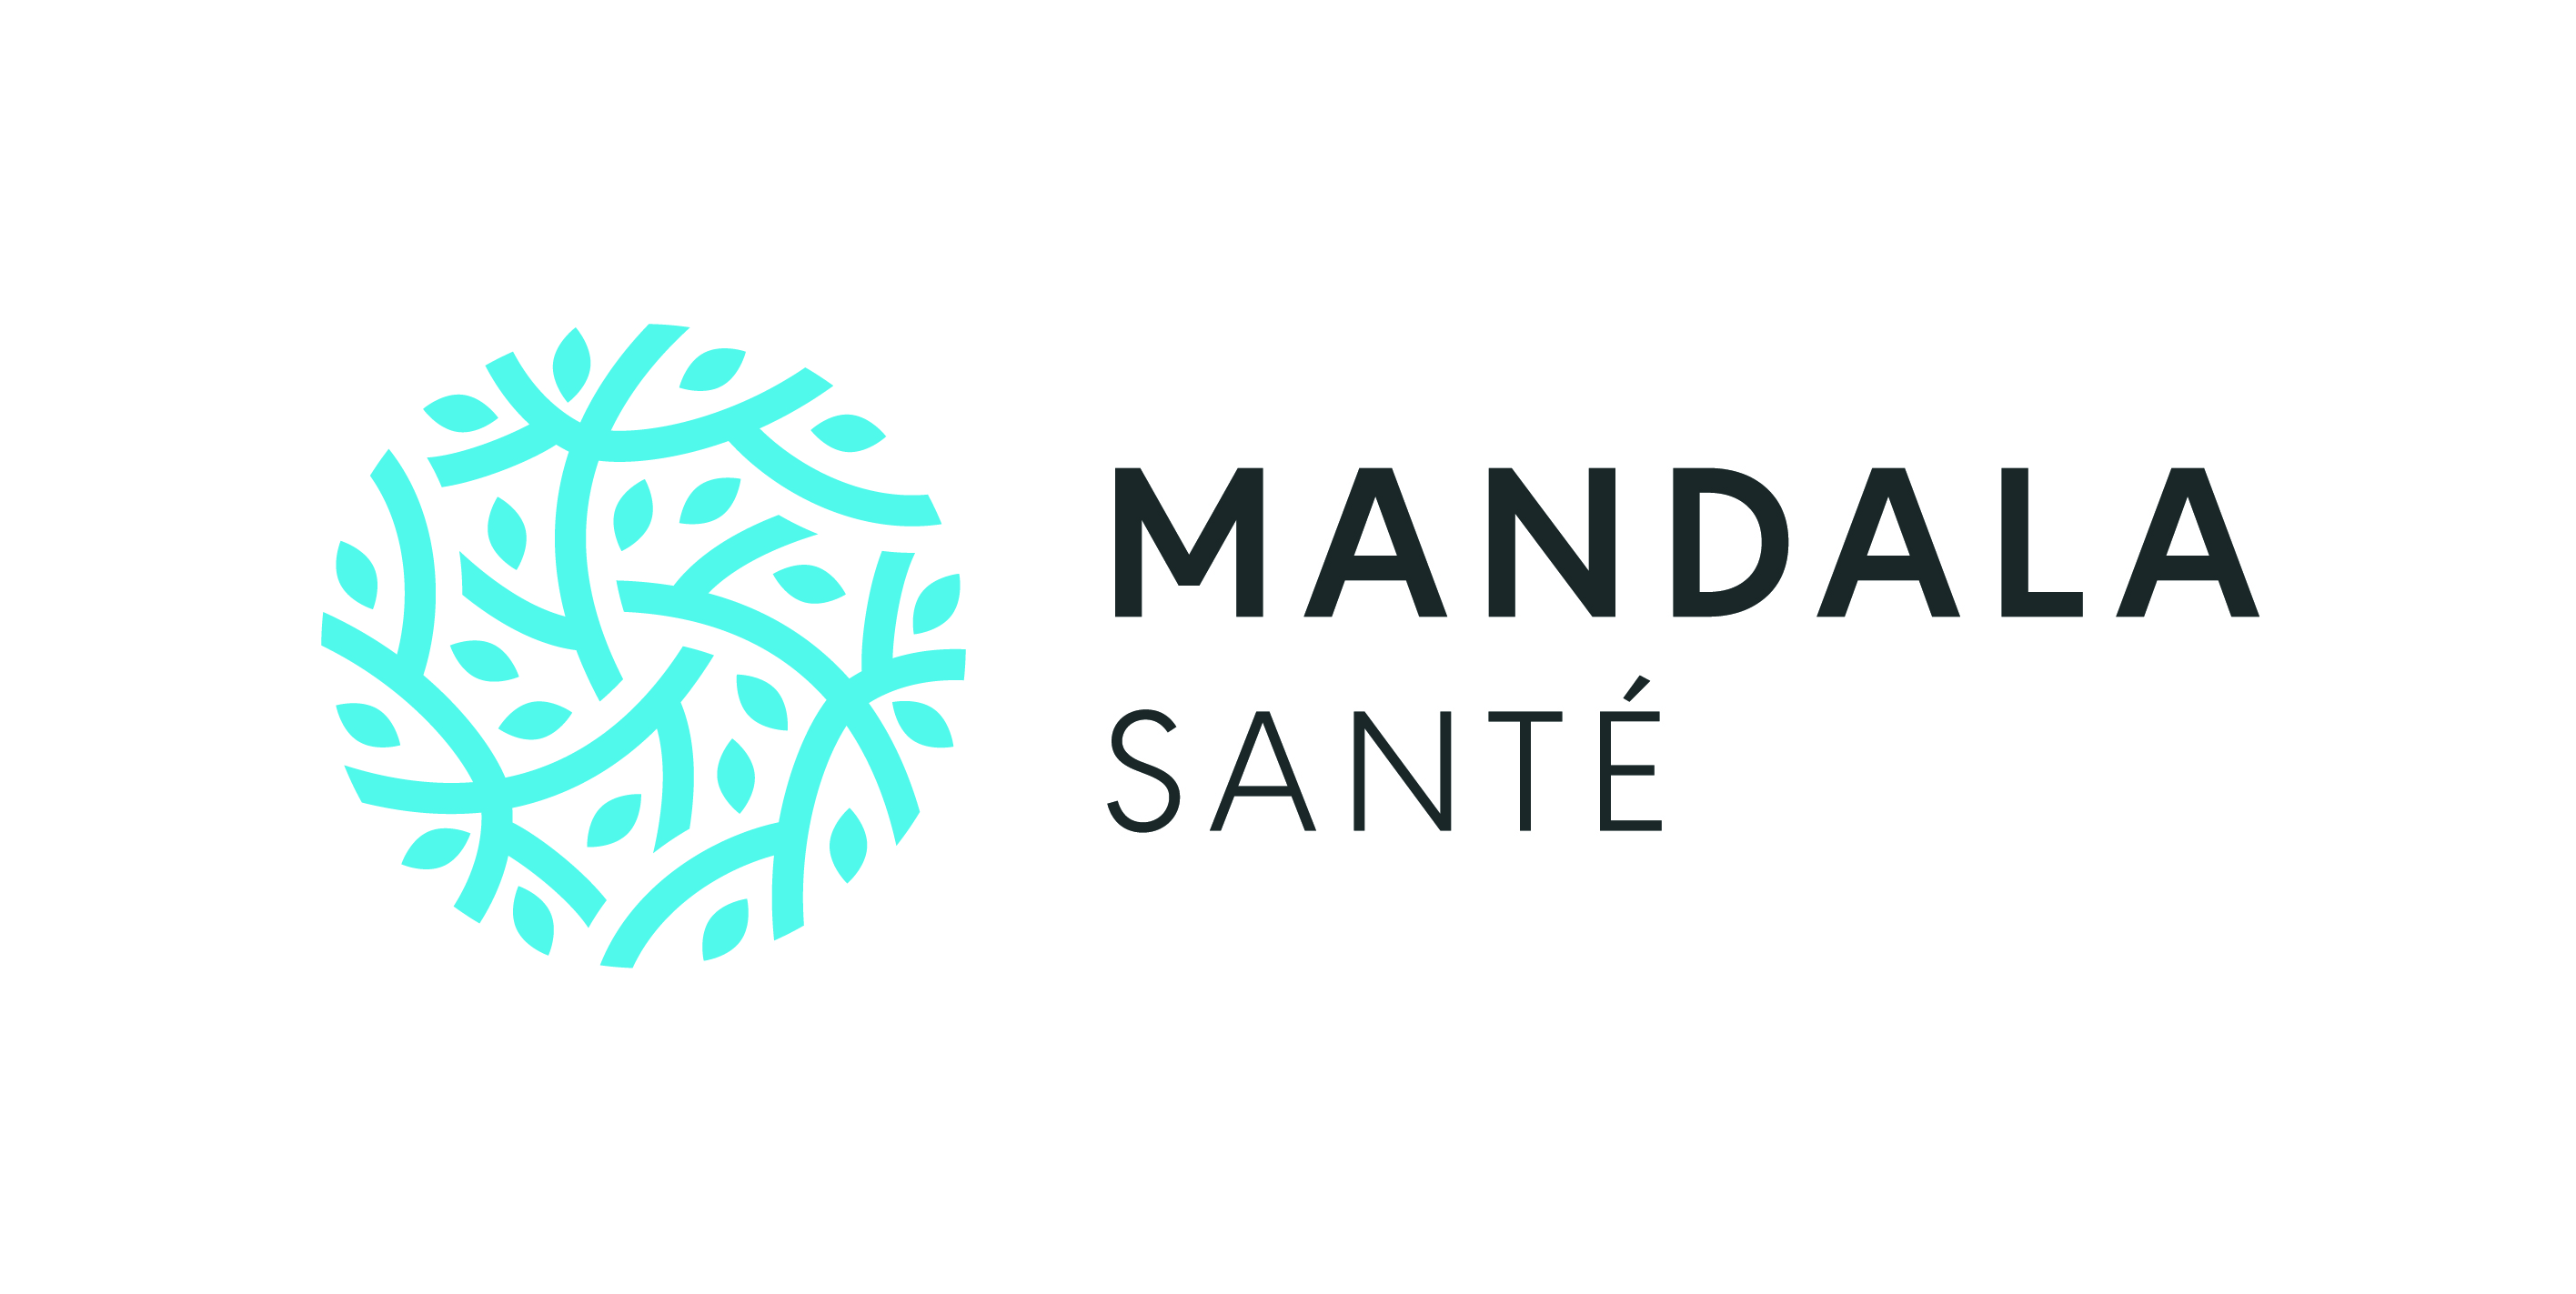 Mandala Santé